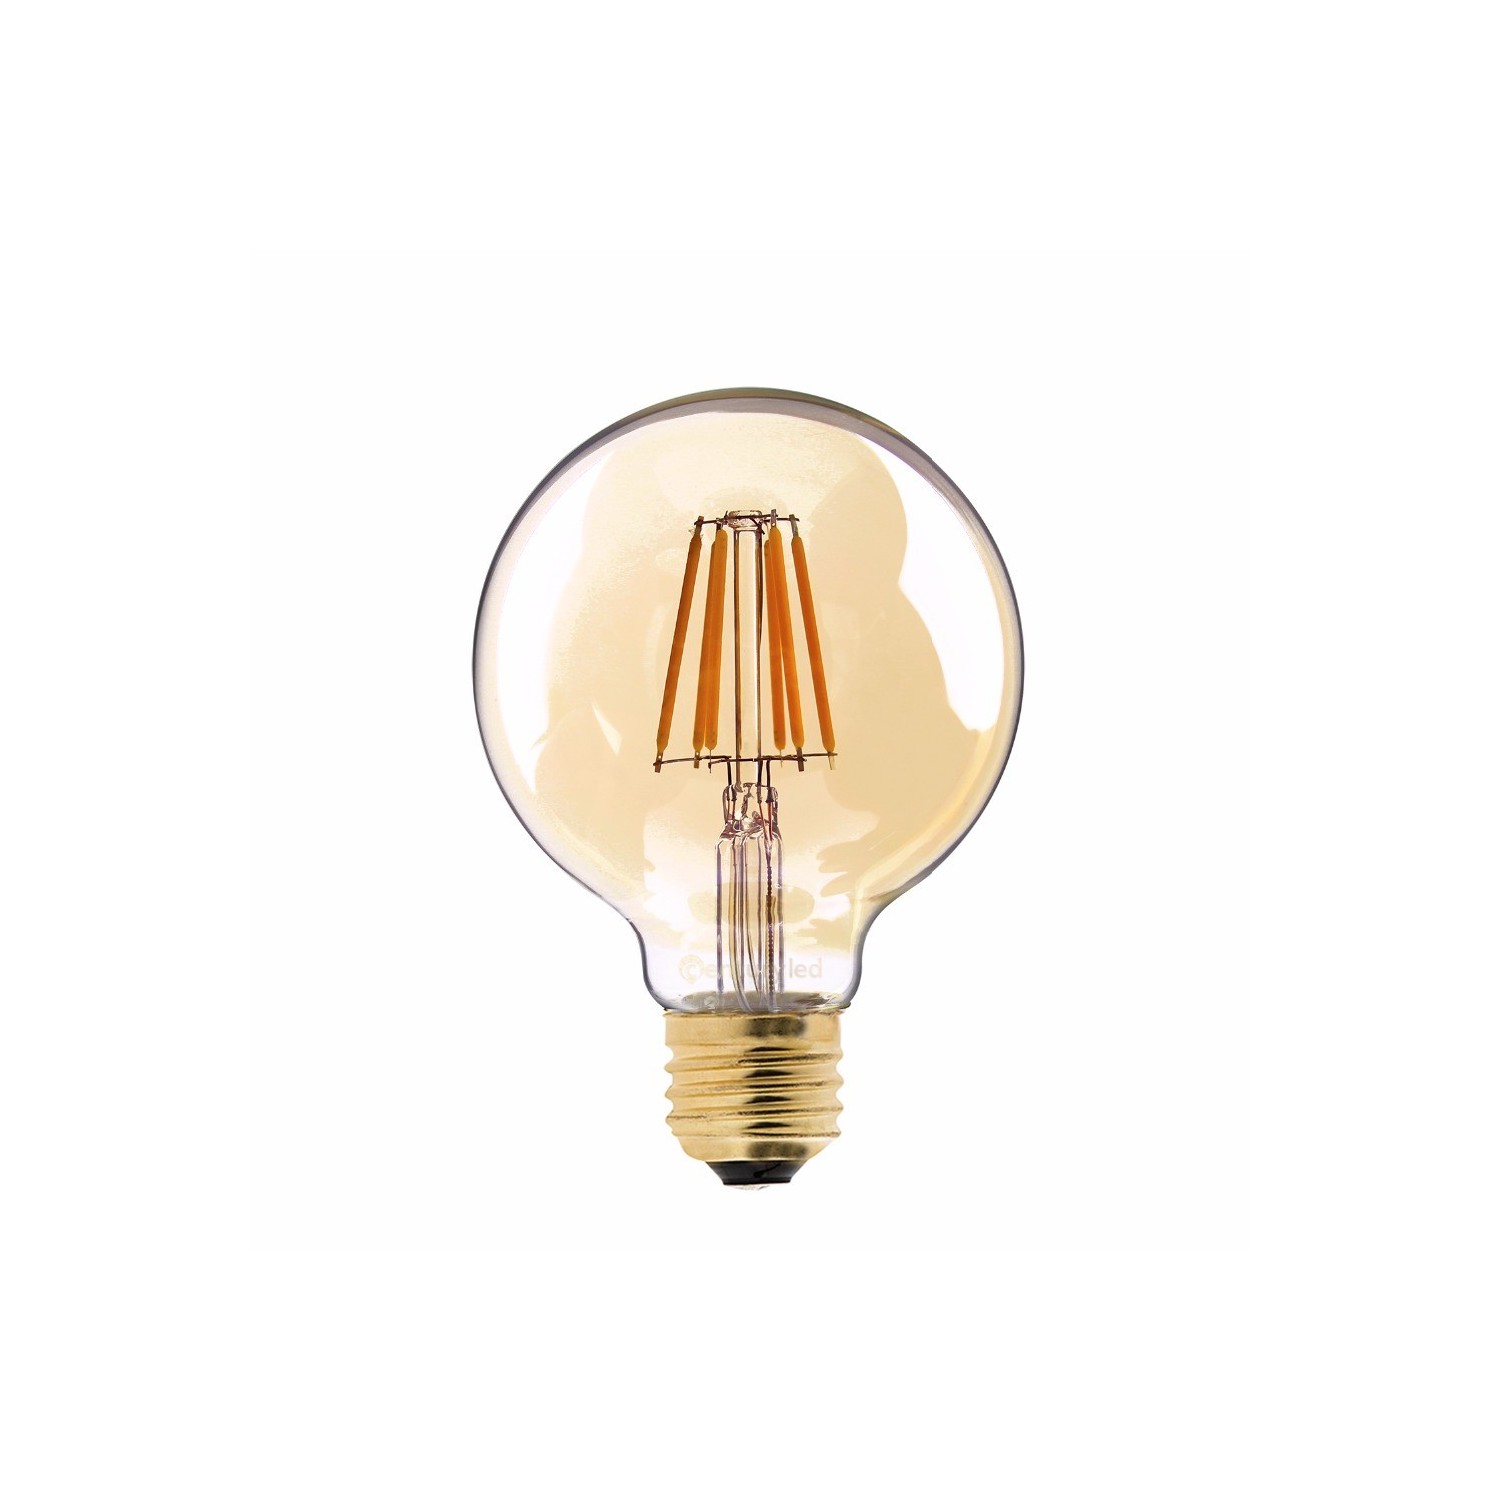 Bombillo dorado LED globo G95 de 4W y luz cálida 2700K- LCO063L